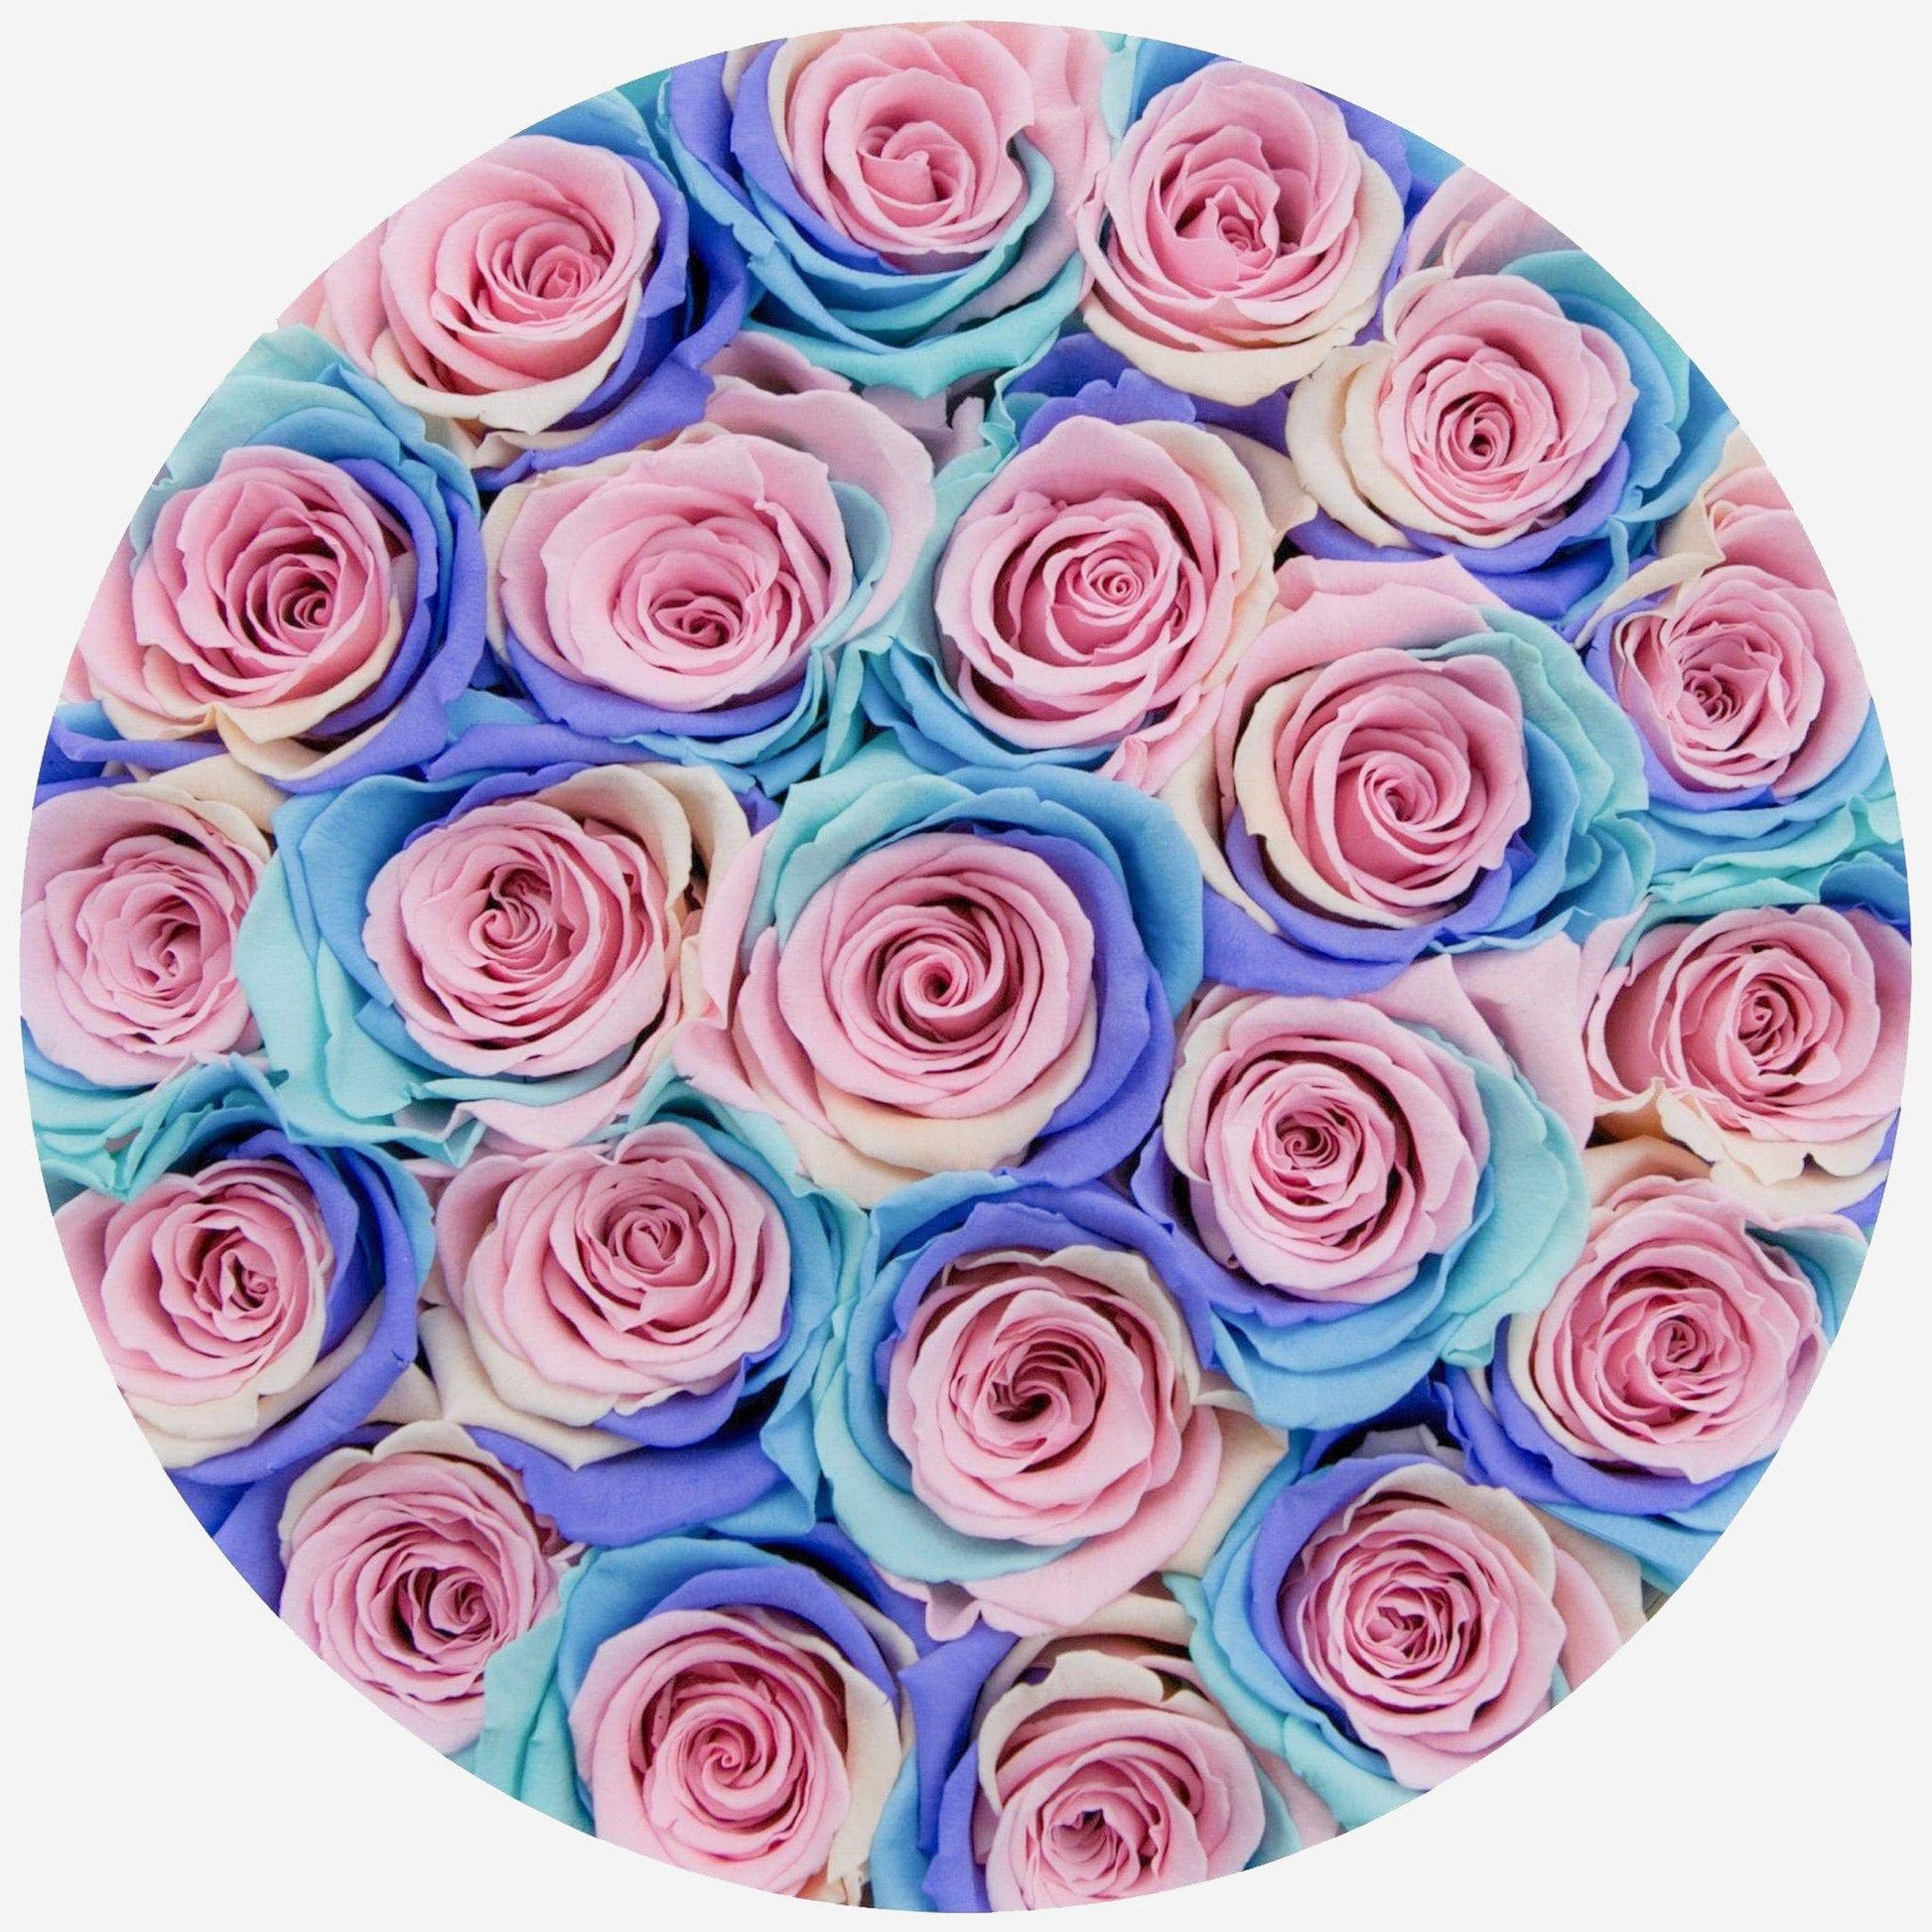 Classic Black Box | Pastel Rainbow Roses - The Million Roses